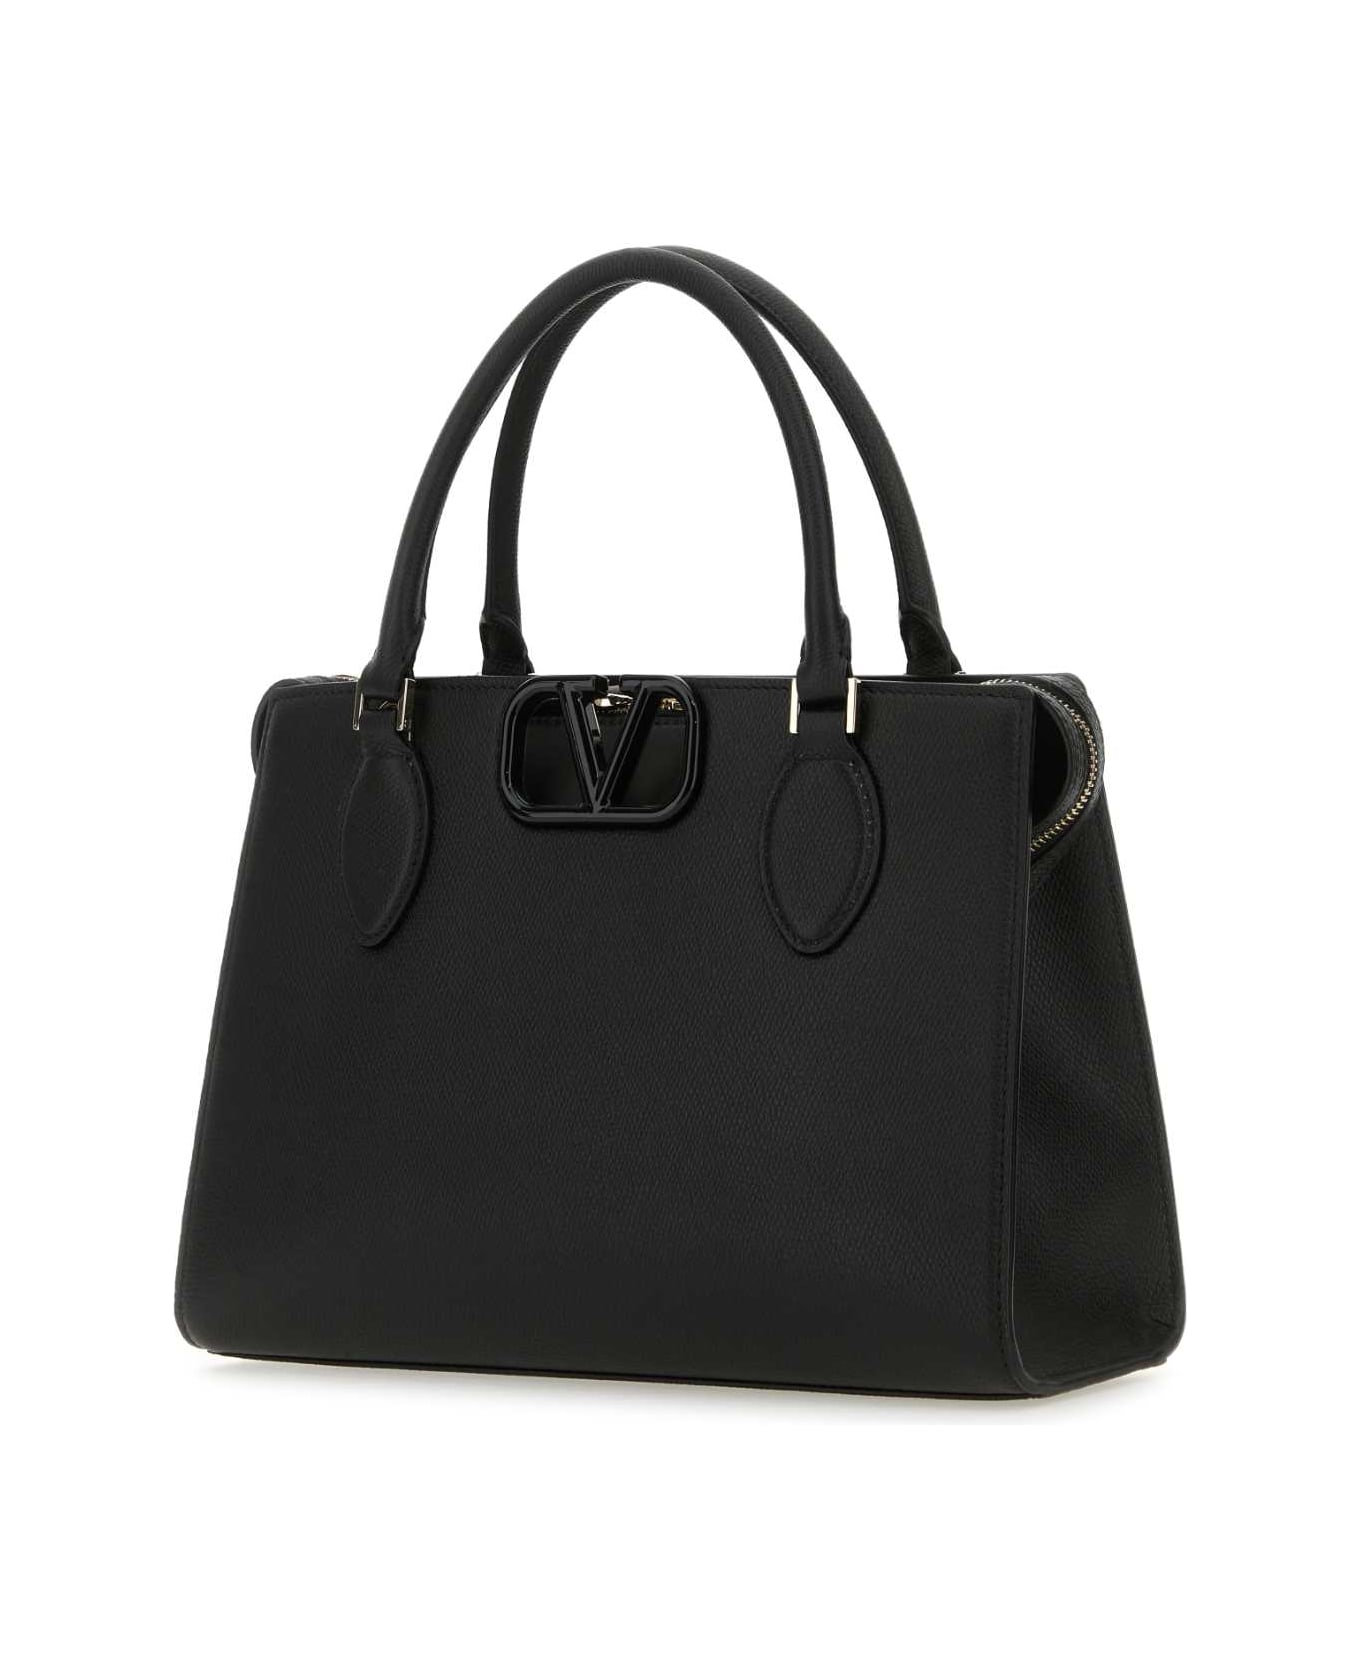 Valentino Garavani Black Leather Vlogo Handbag - NERO